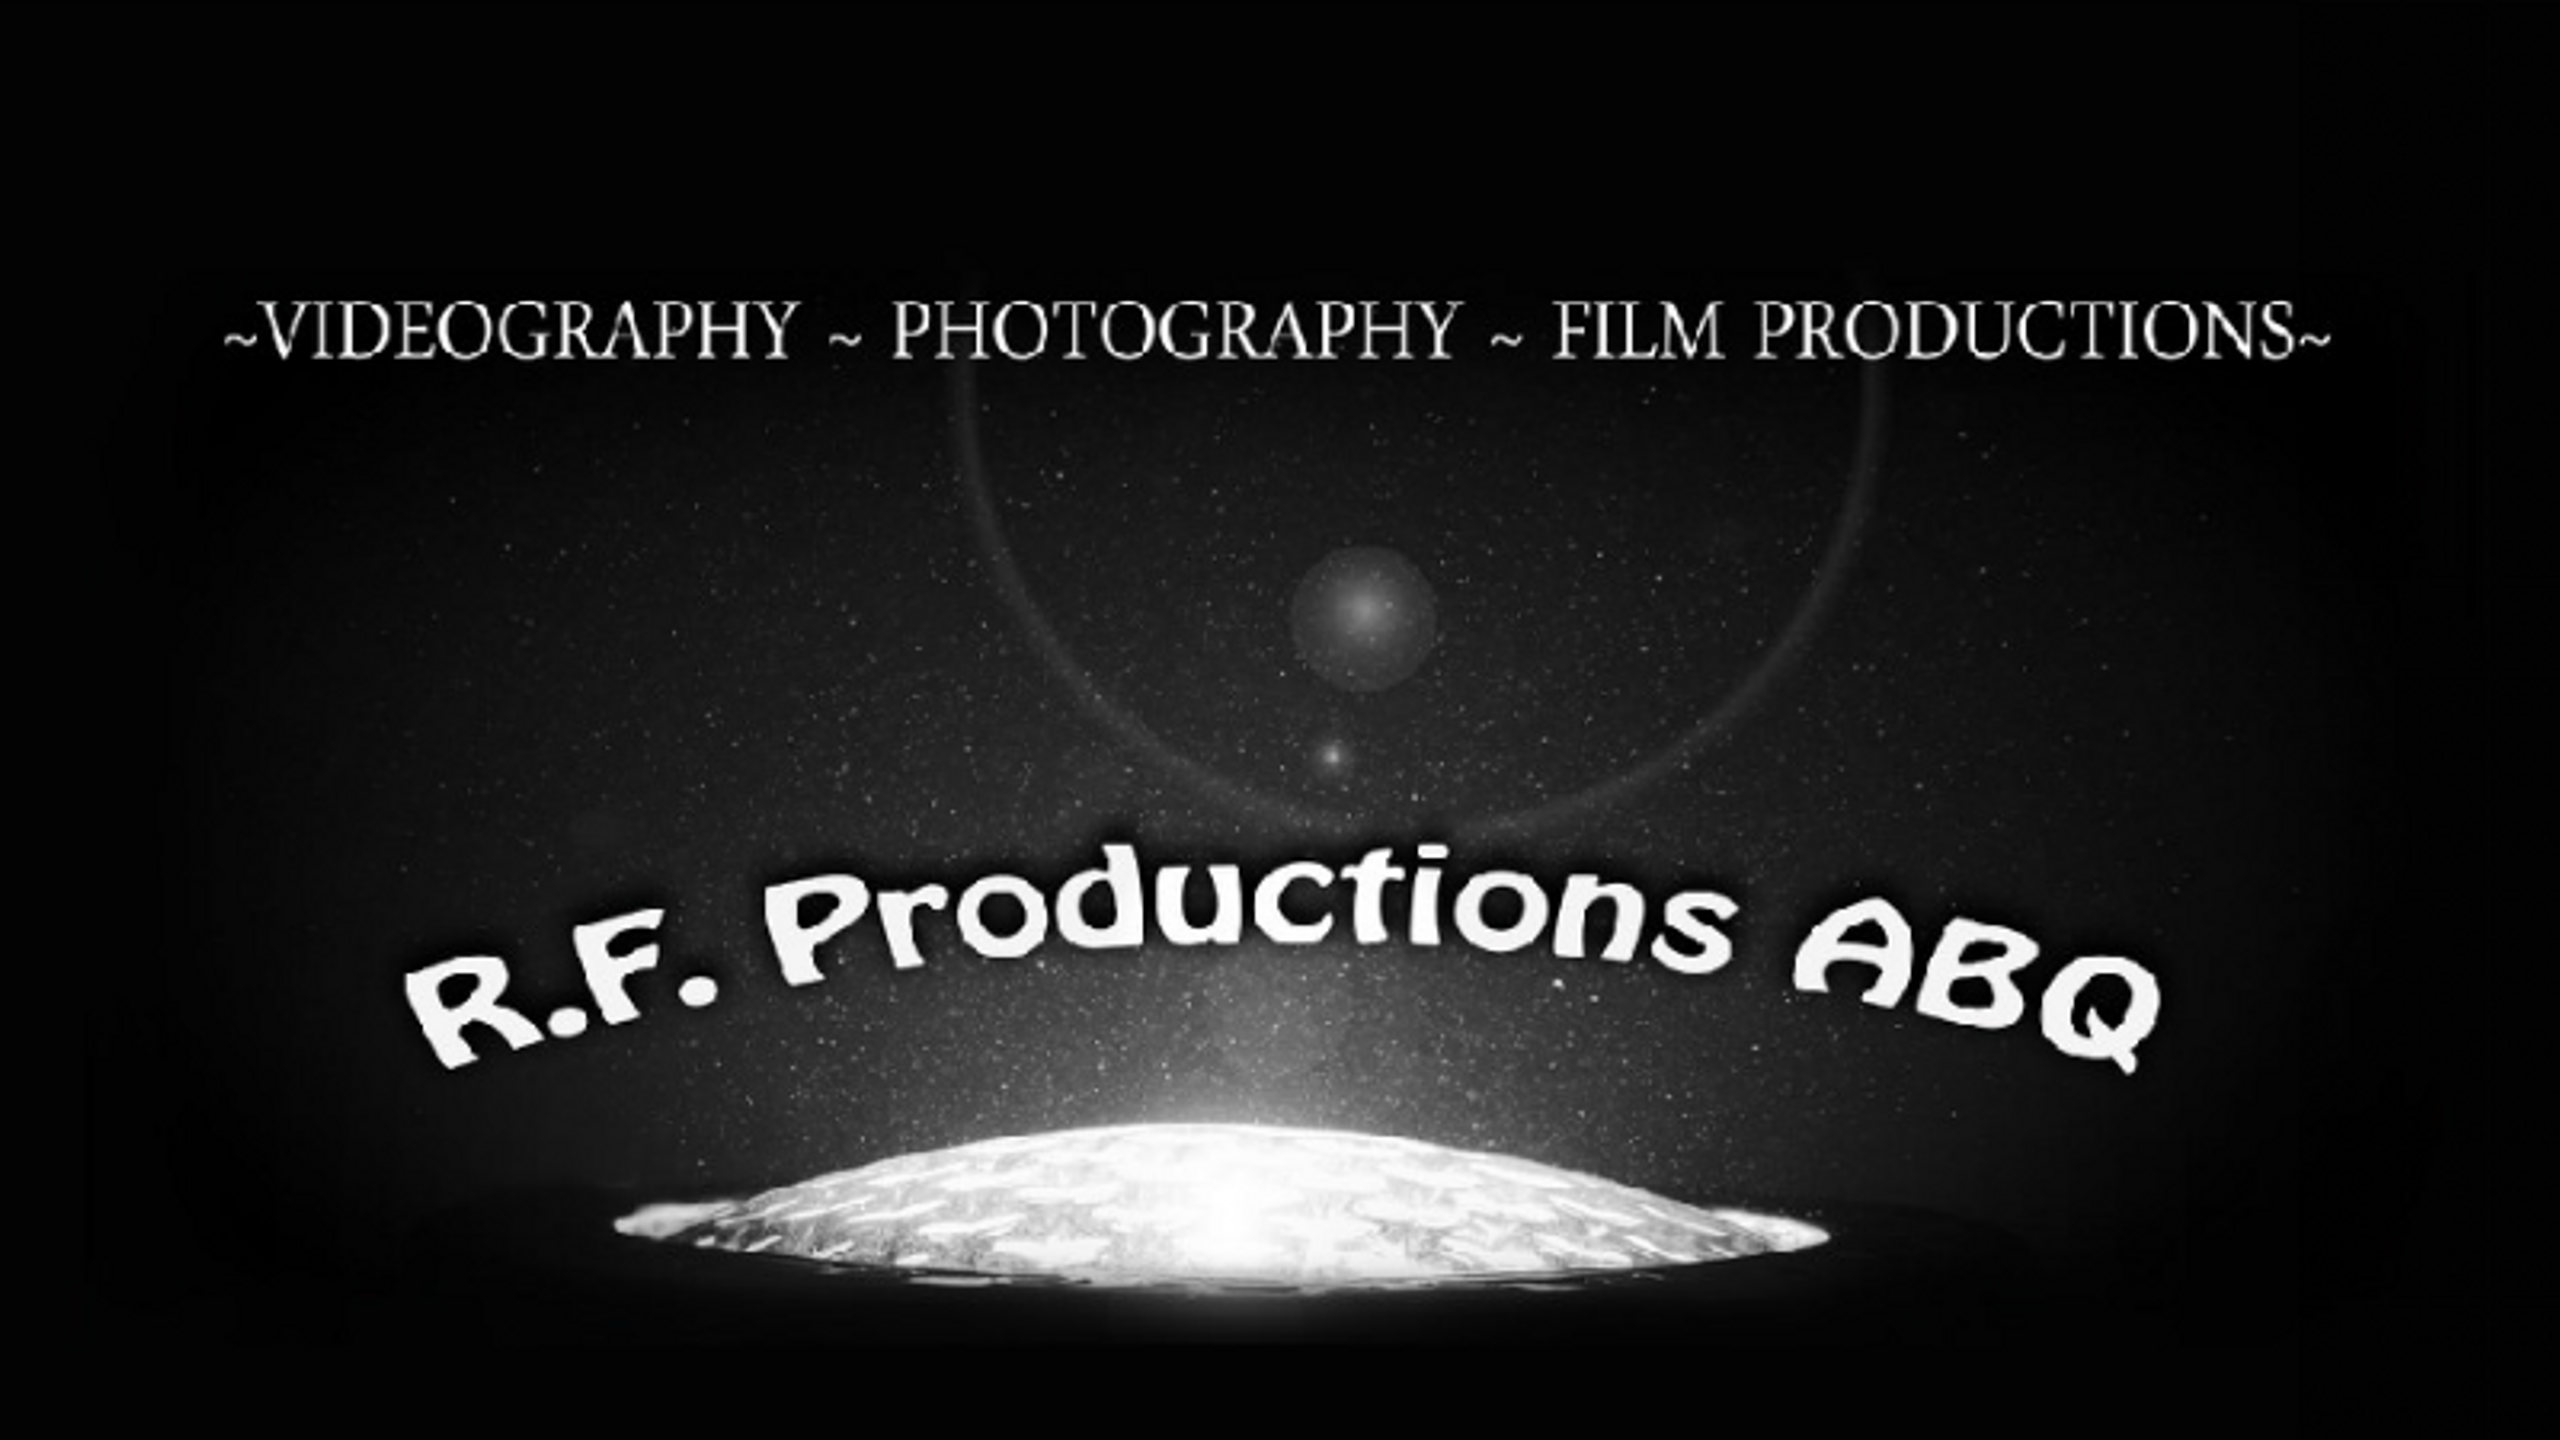 R.F. Productions ABQ